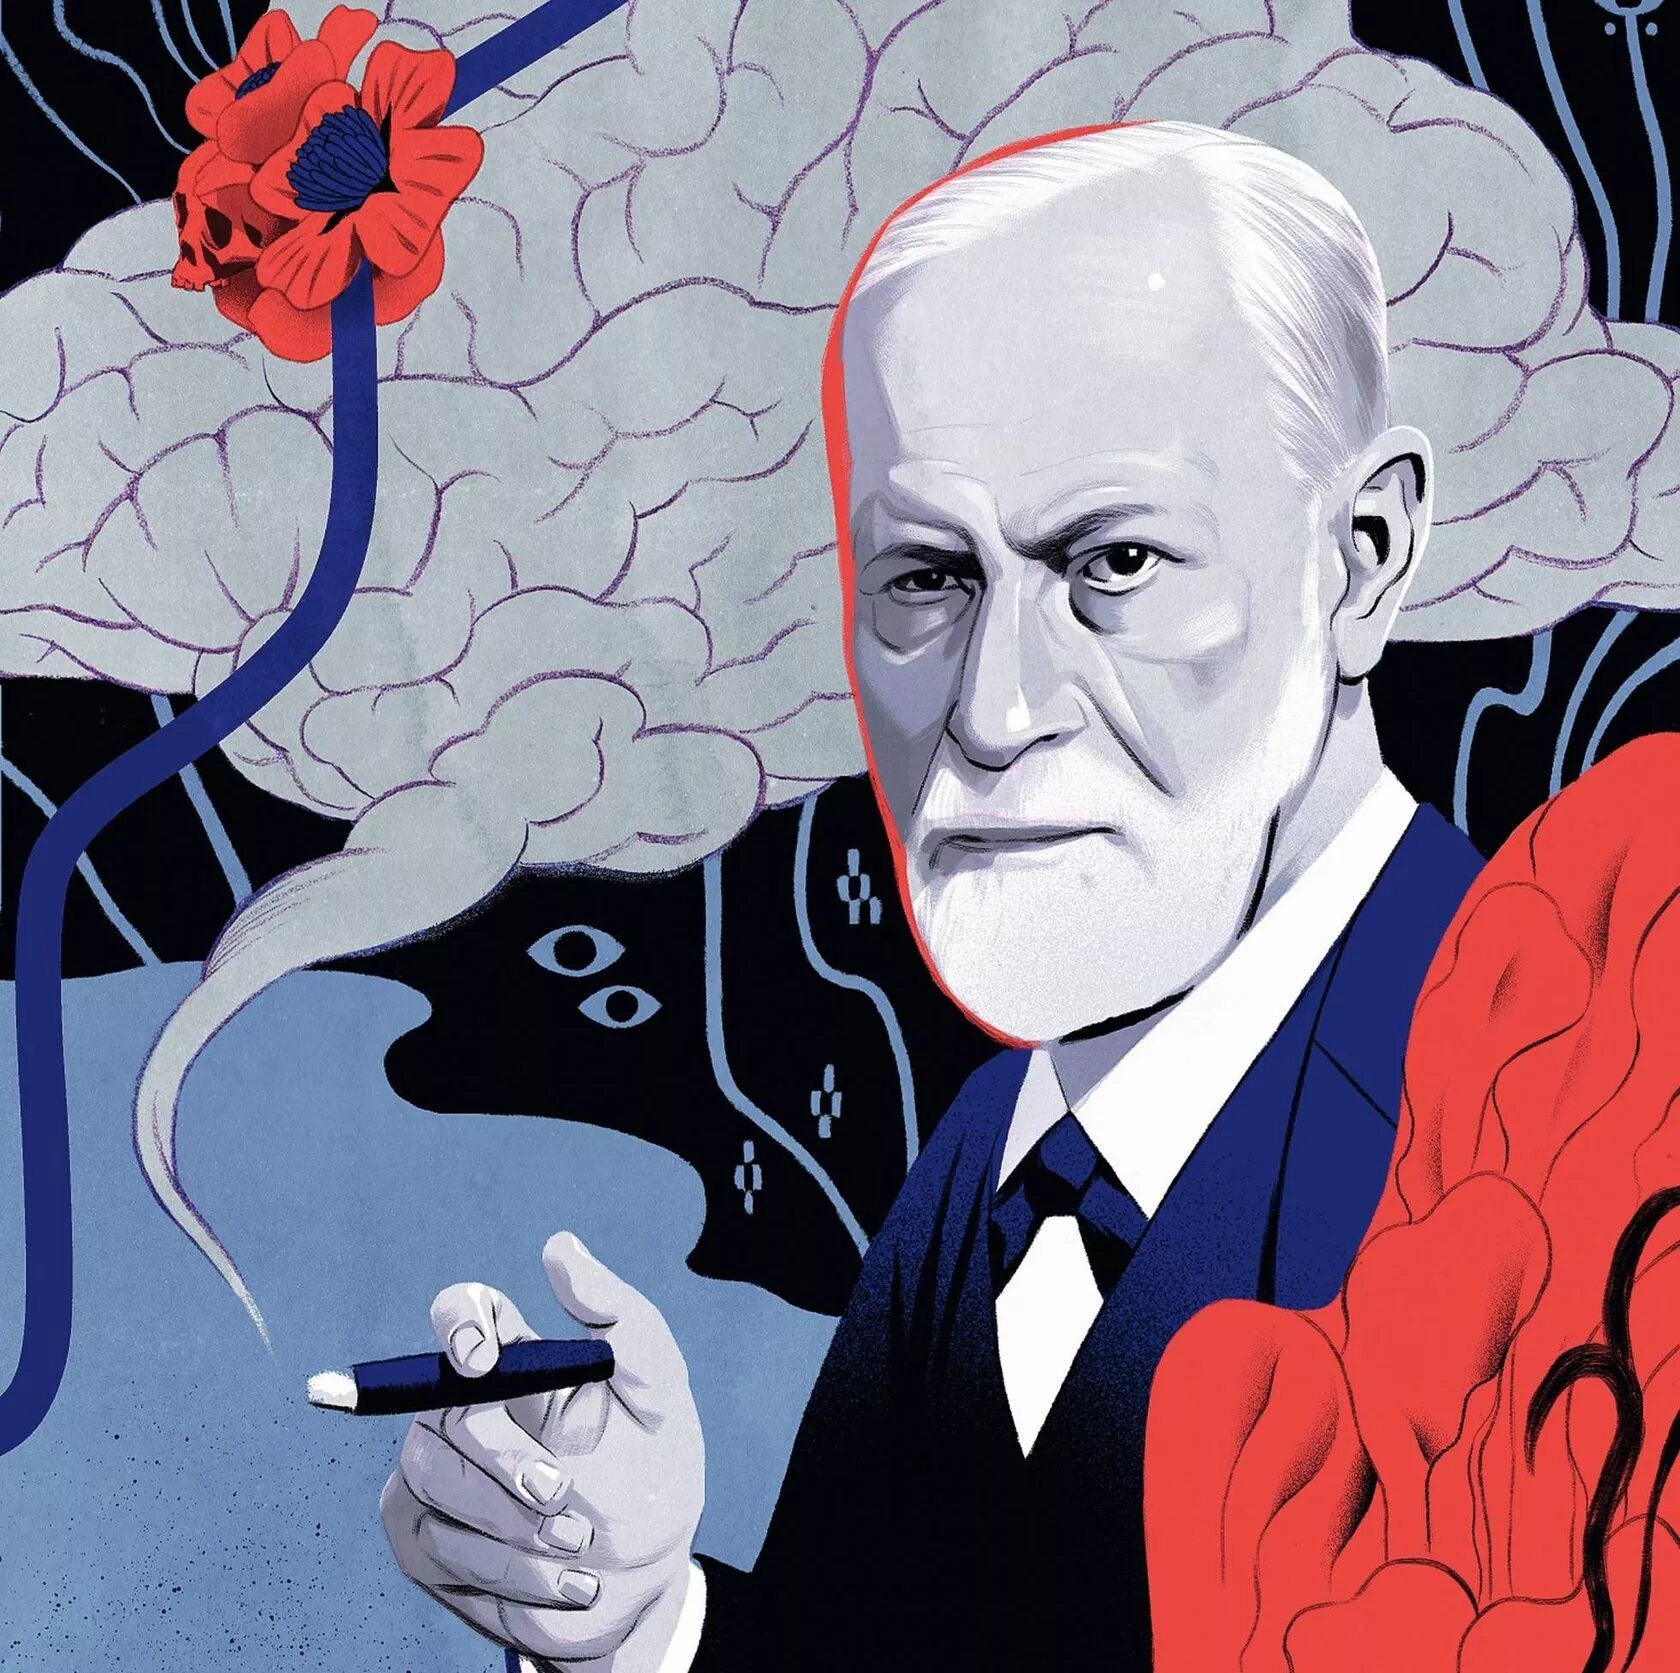 Постер Sigmund Freud. Теория психоанализа Фрейда арт. Клинический психоанализ